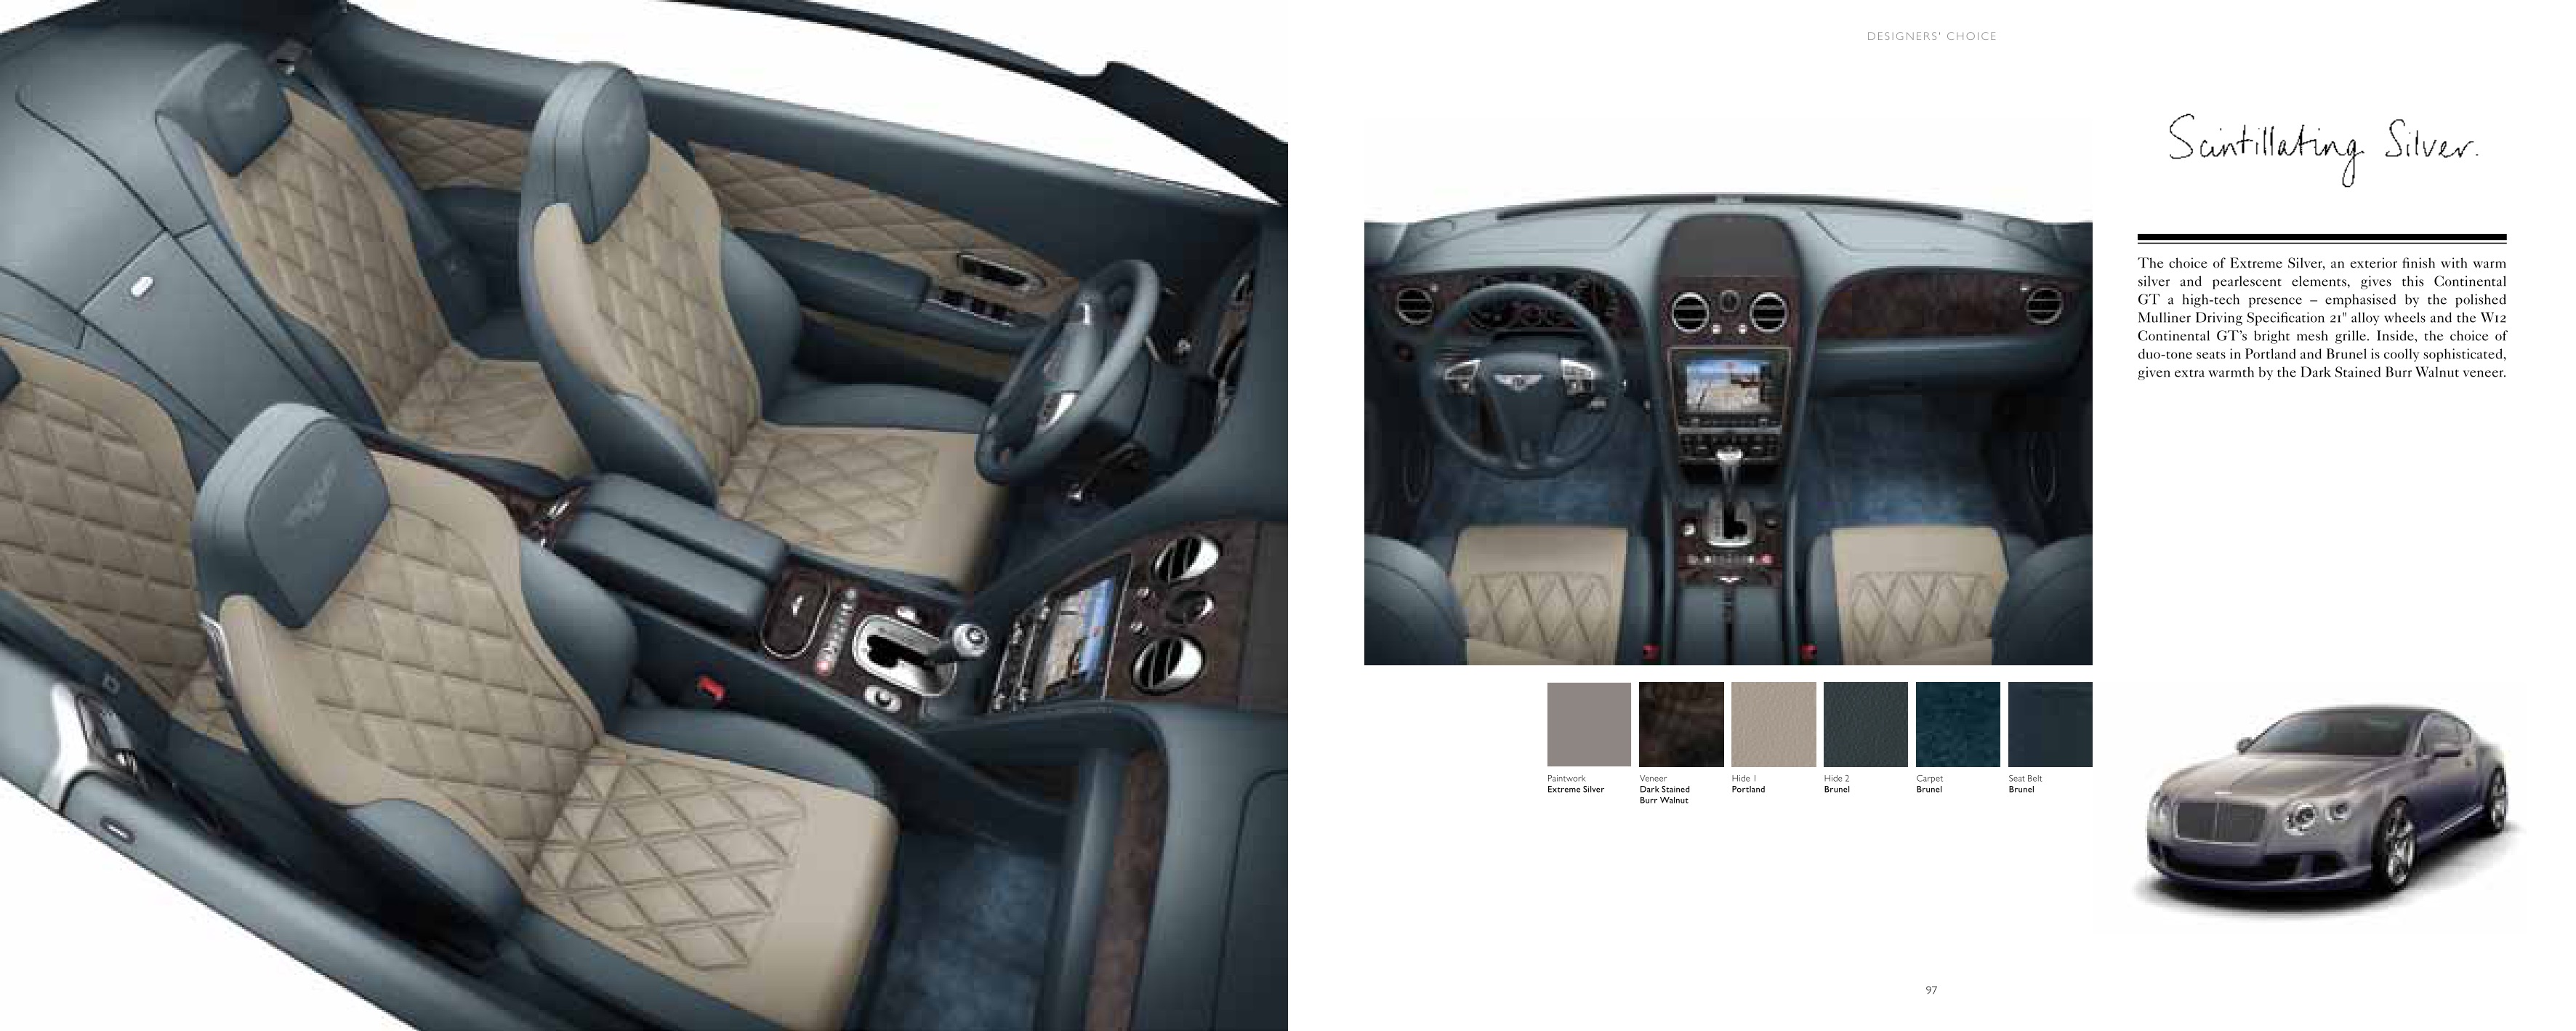 2013 Bentley Continental GT Brochure Page 1